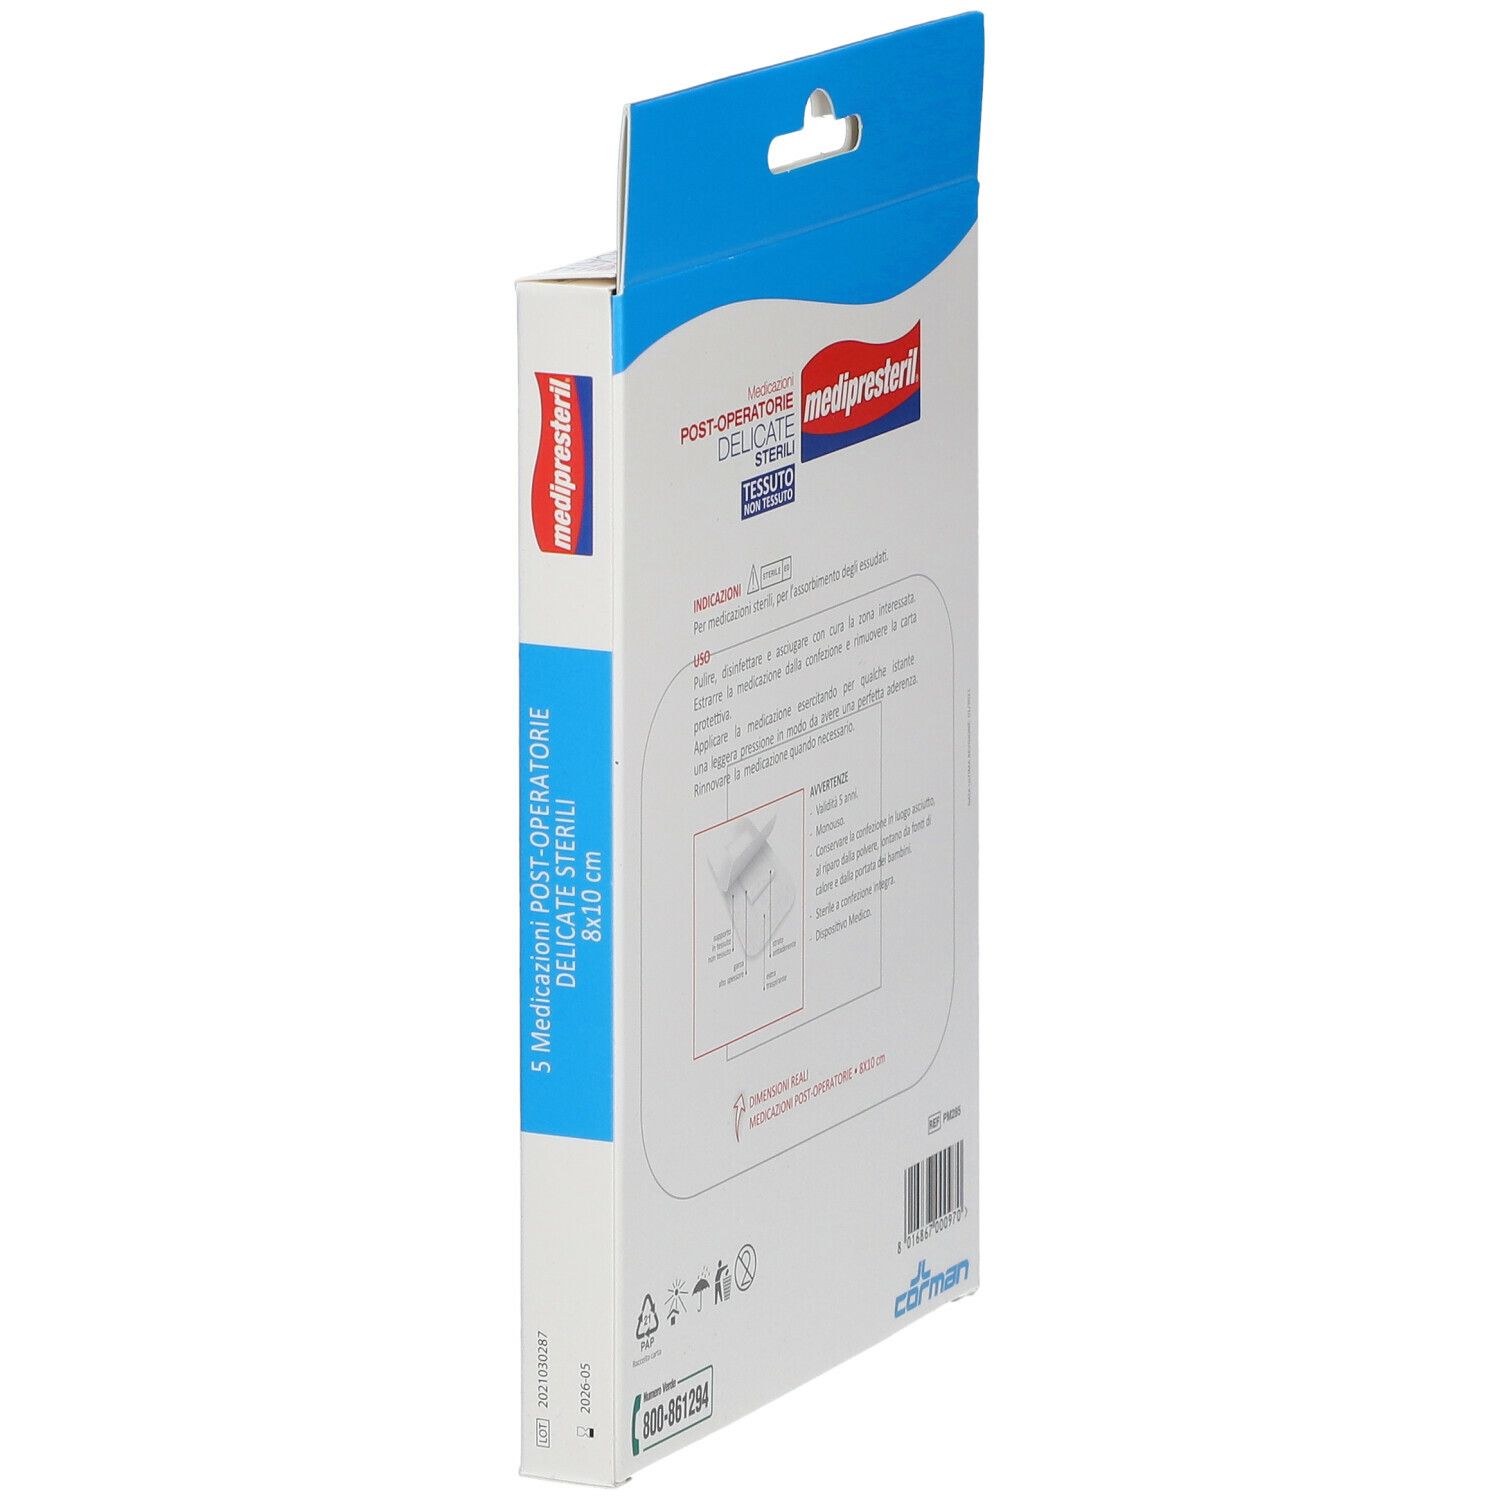 Medipresteril® Medicazioni Post Operatorie Delicate Sterili 8 x 10 cm